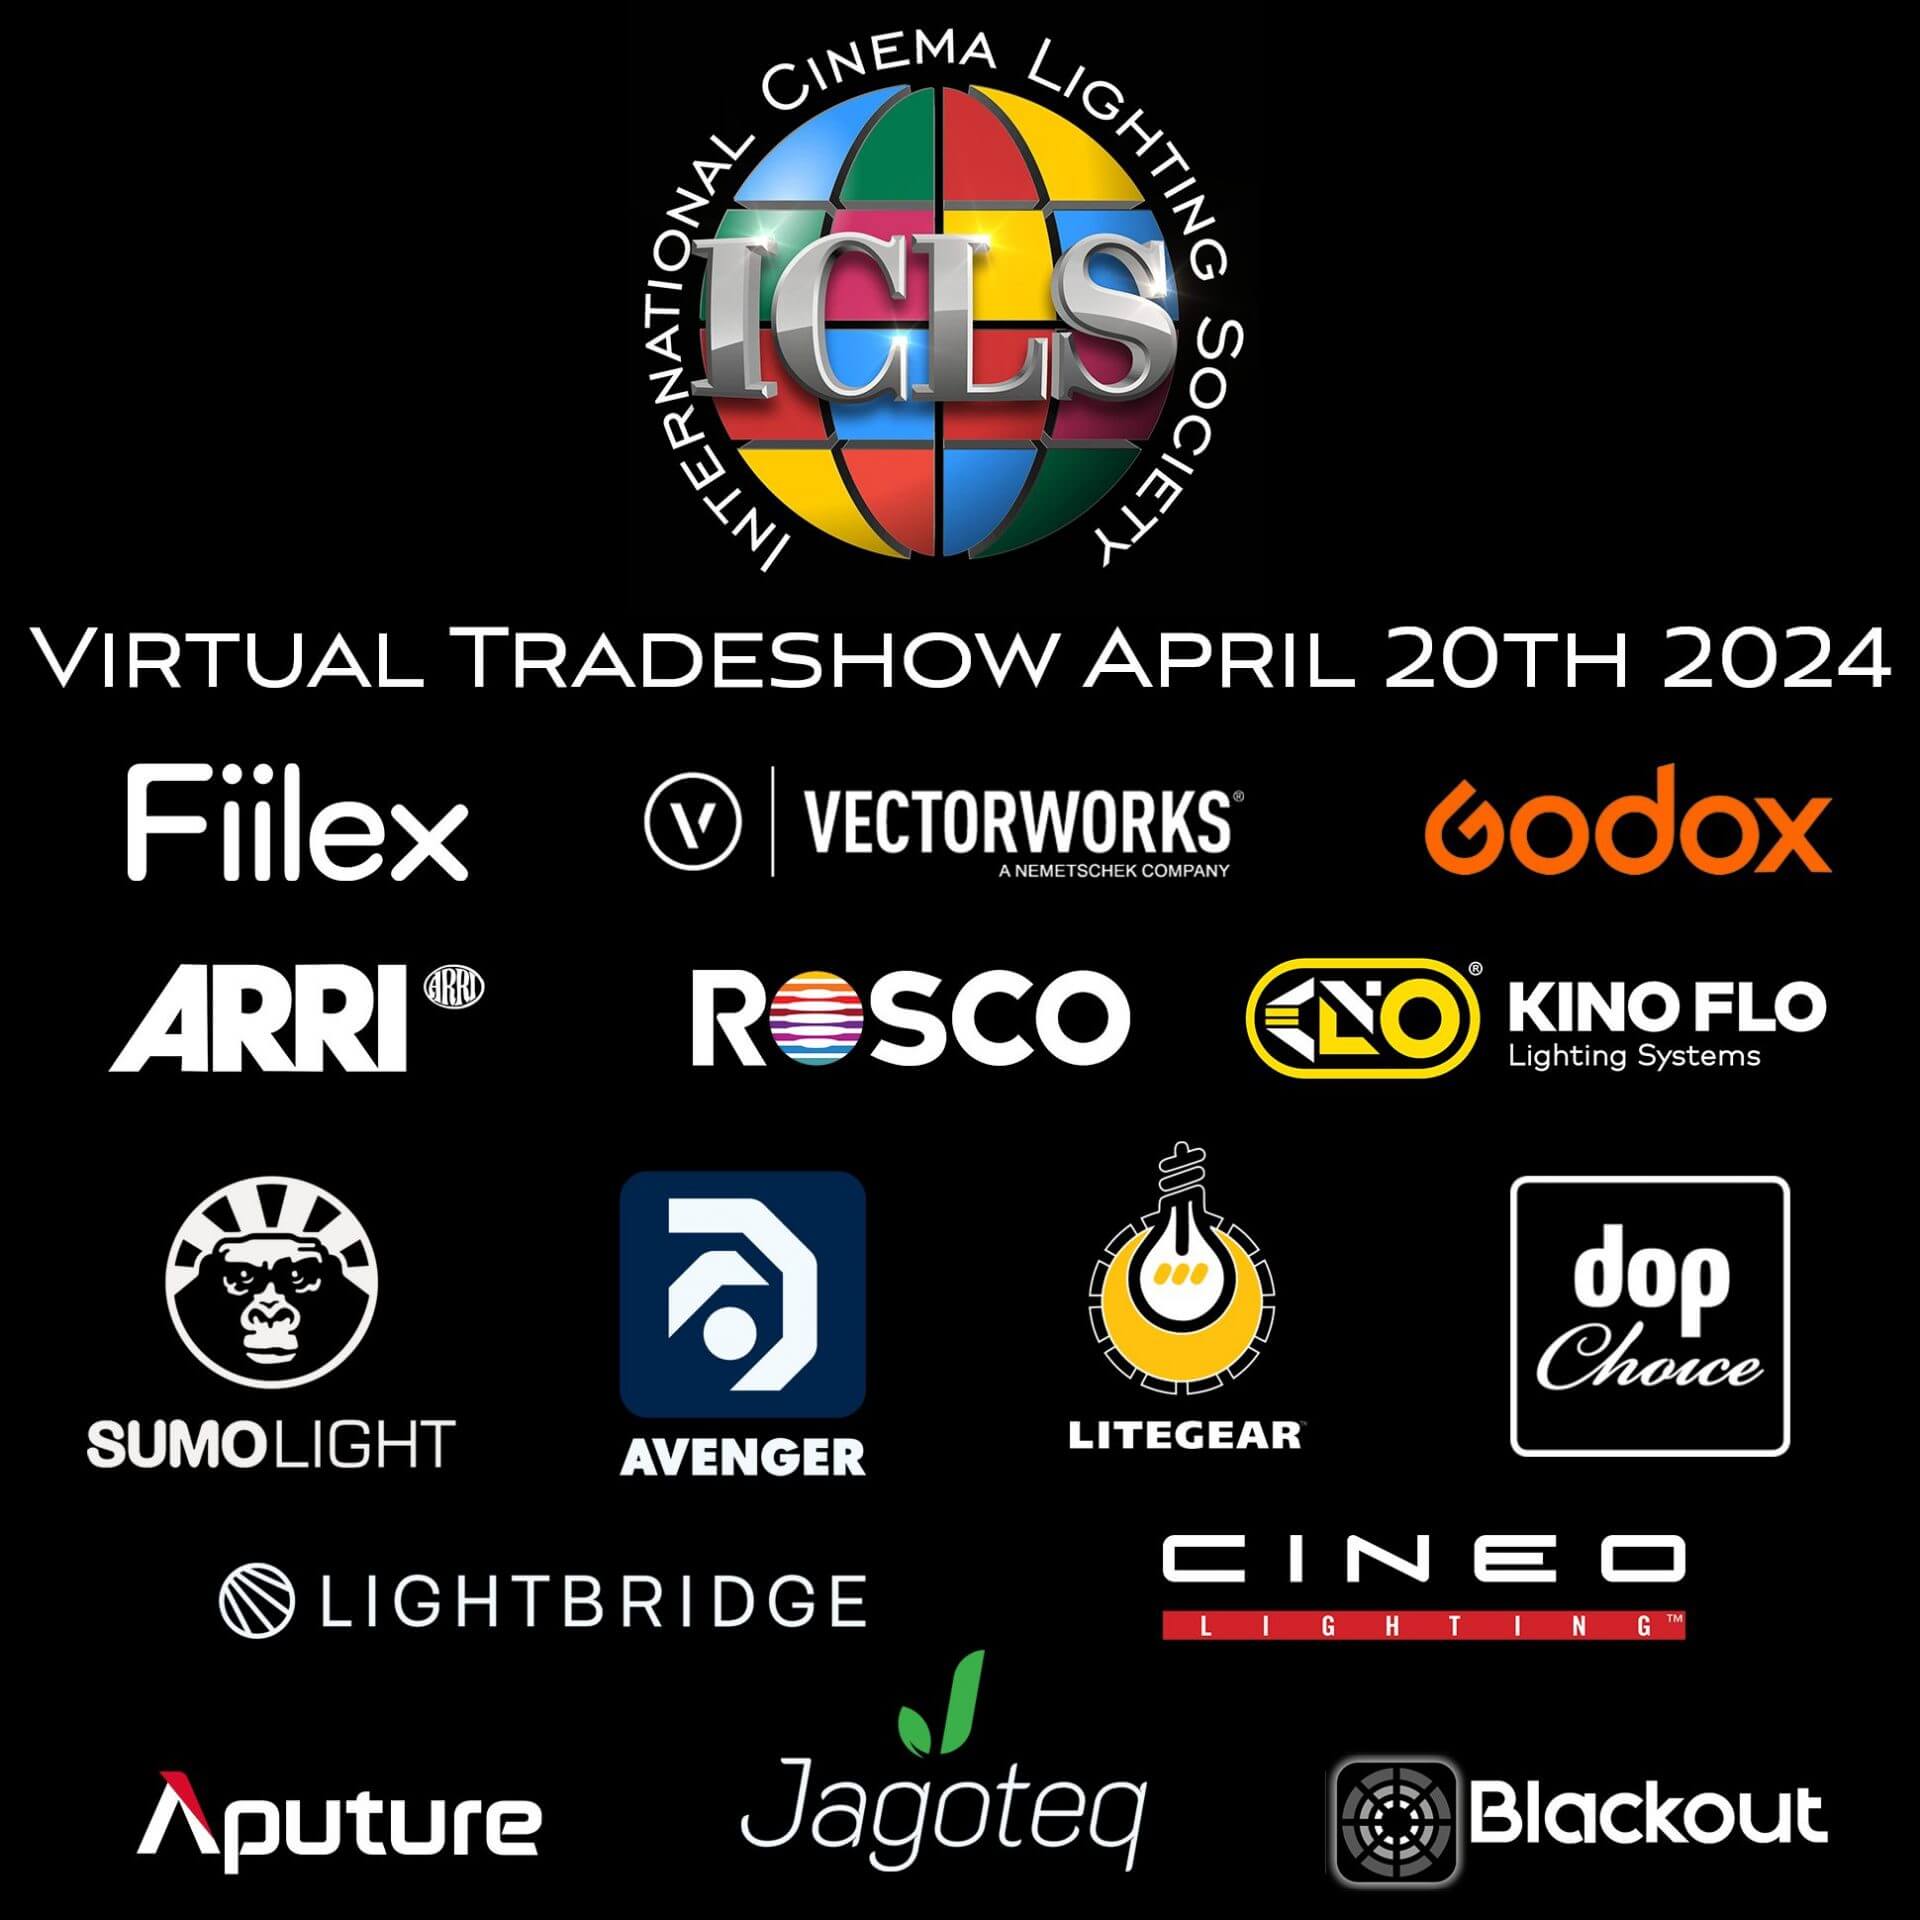 5th ICLS Virtual Tradeshow – AVENGER